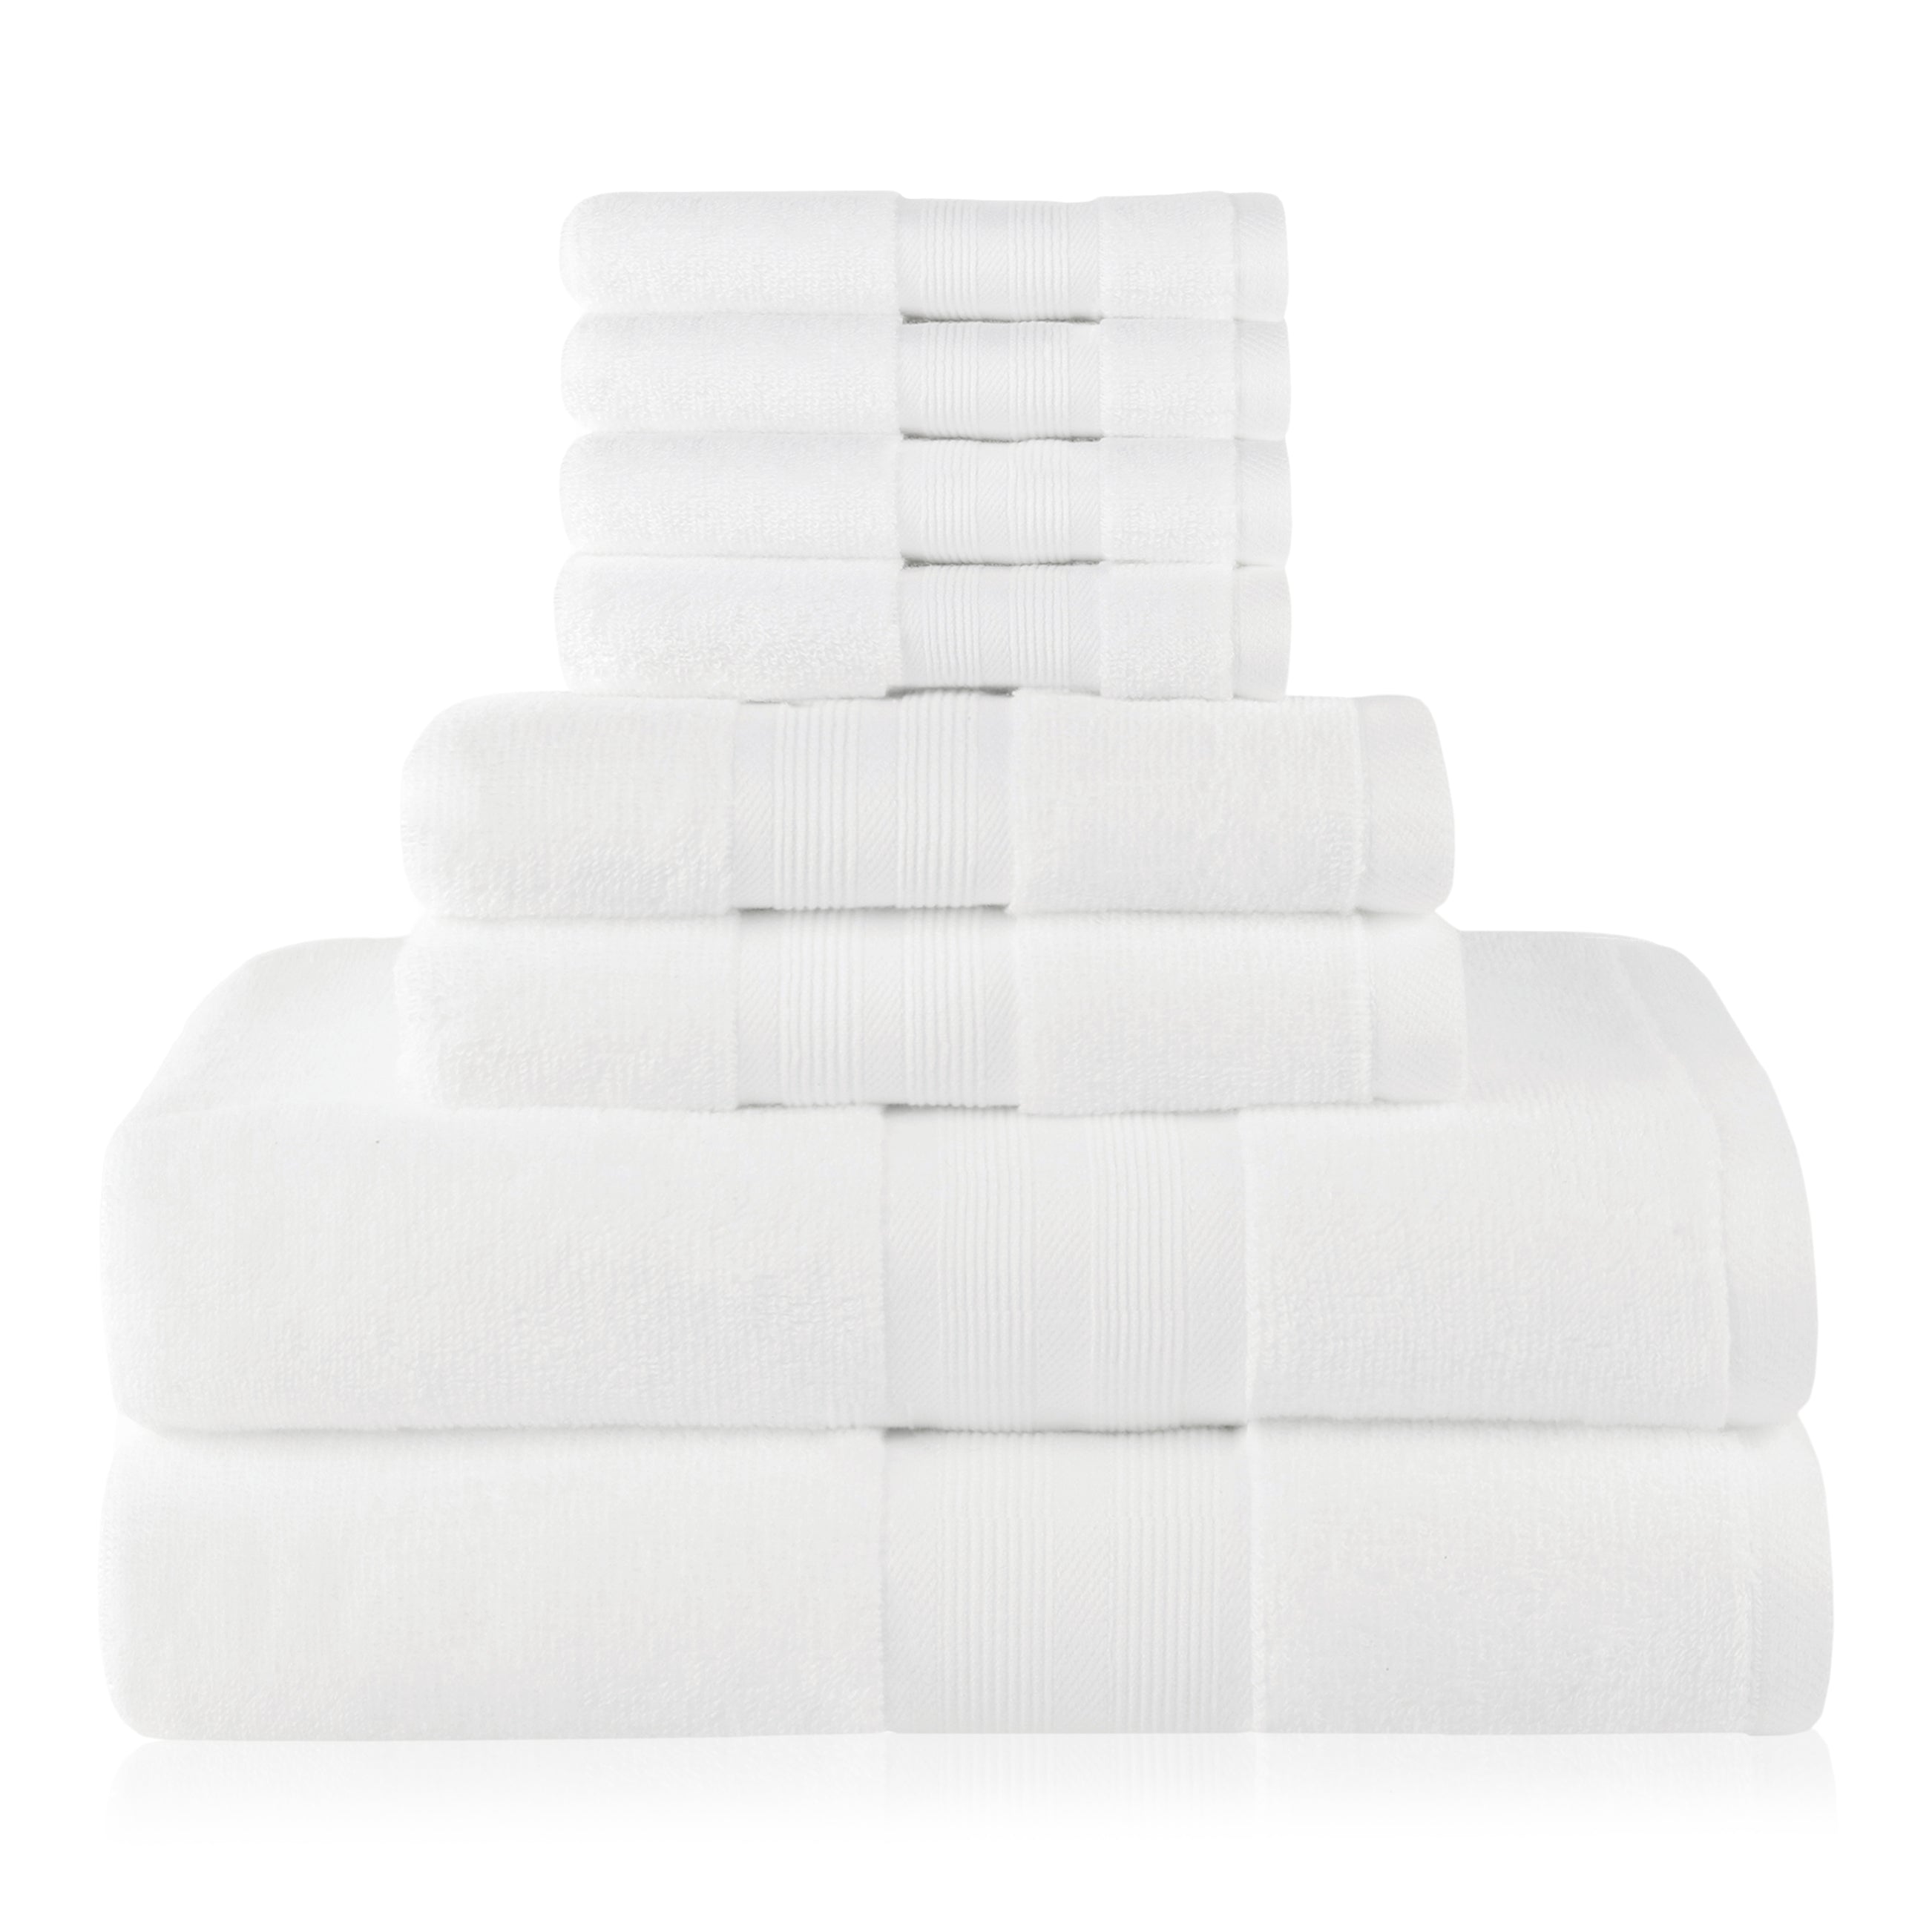 100% Organic Cotton Luxury Bath Towel- Made Here by 1888 Mills (2pk)